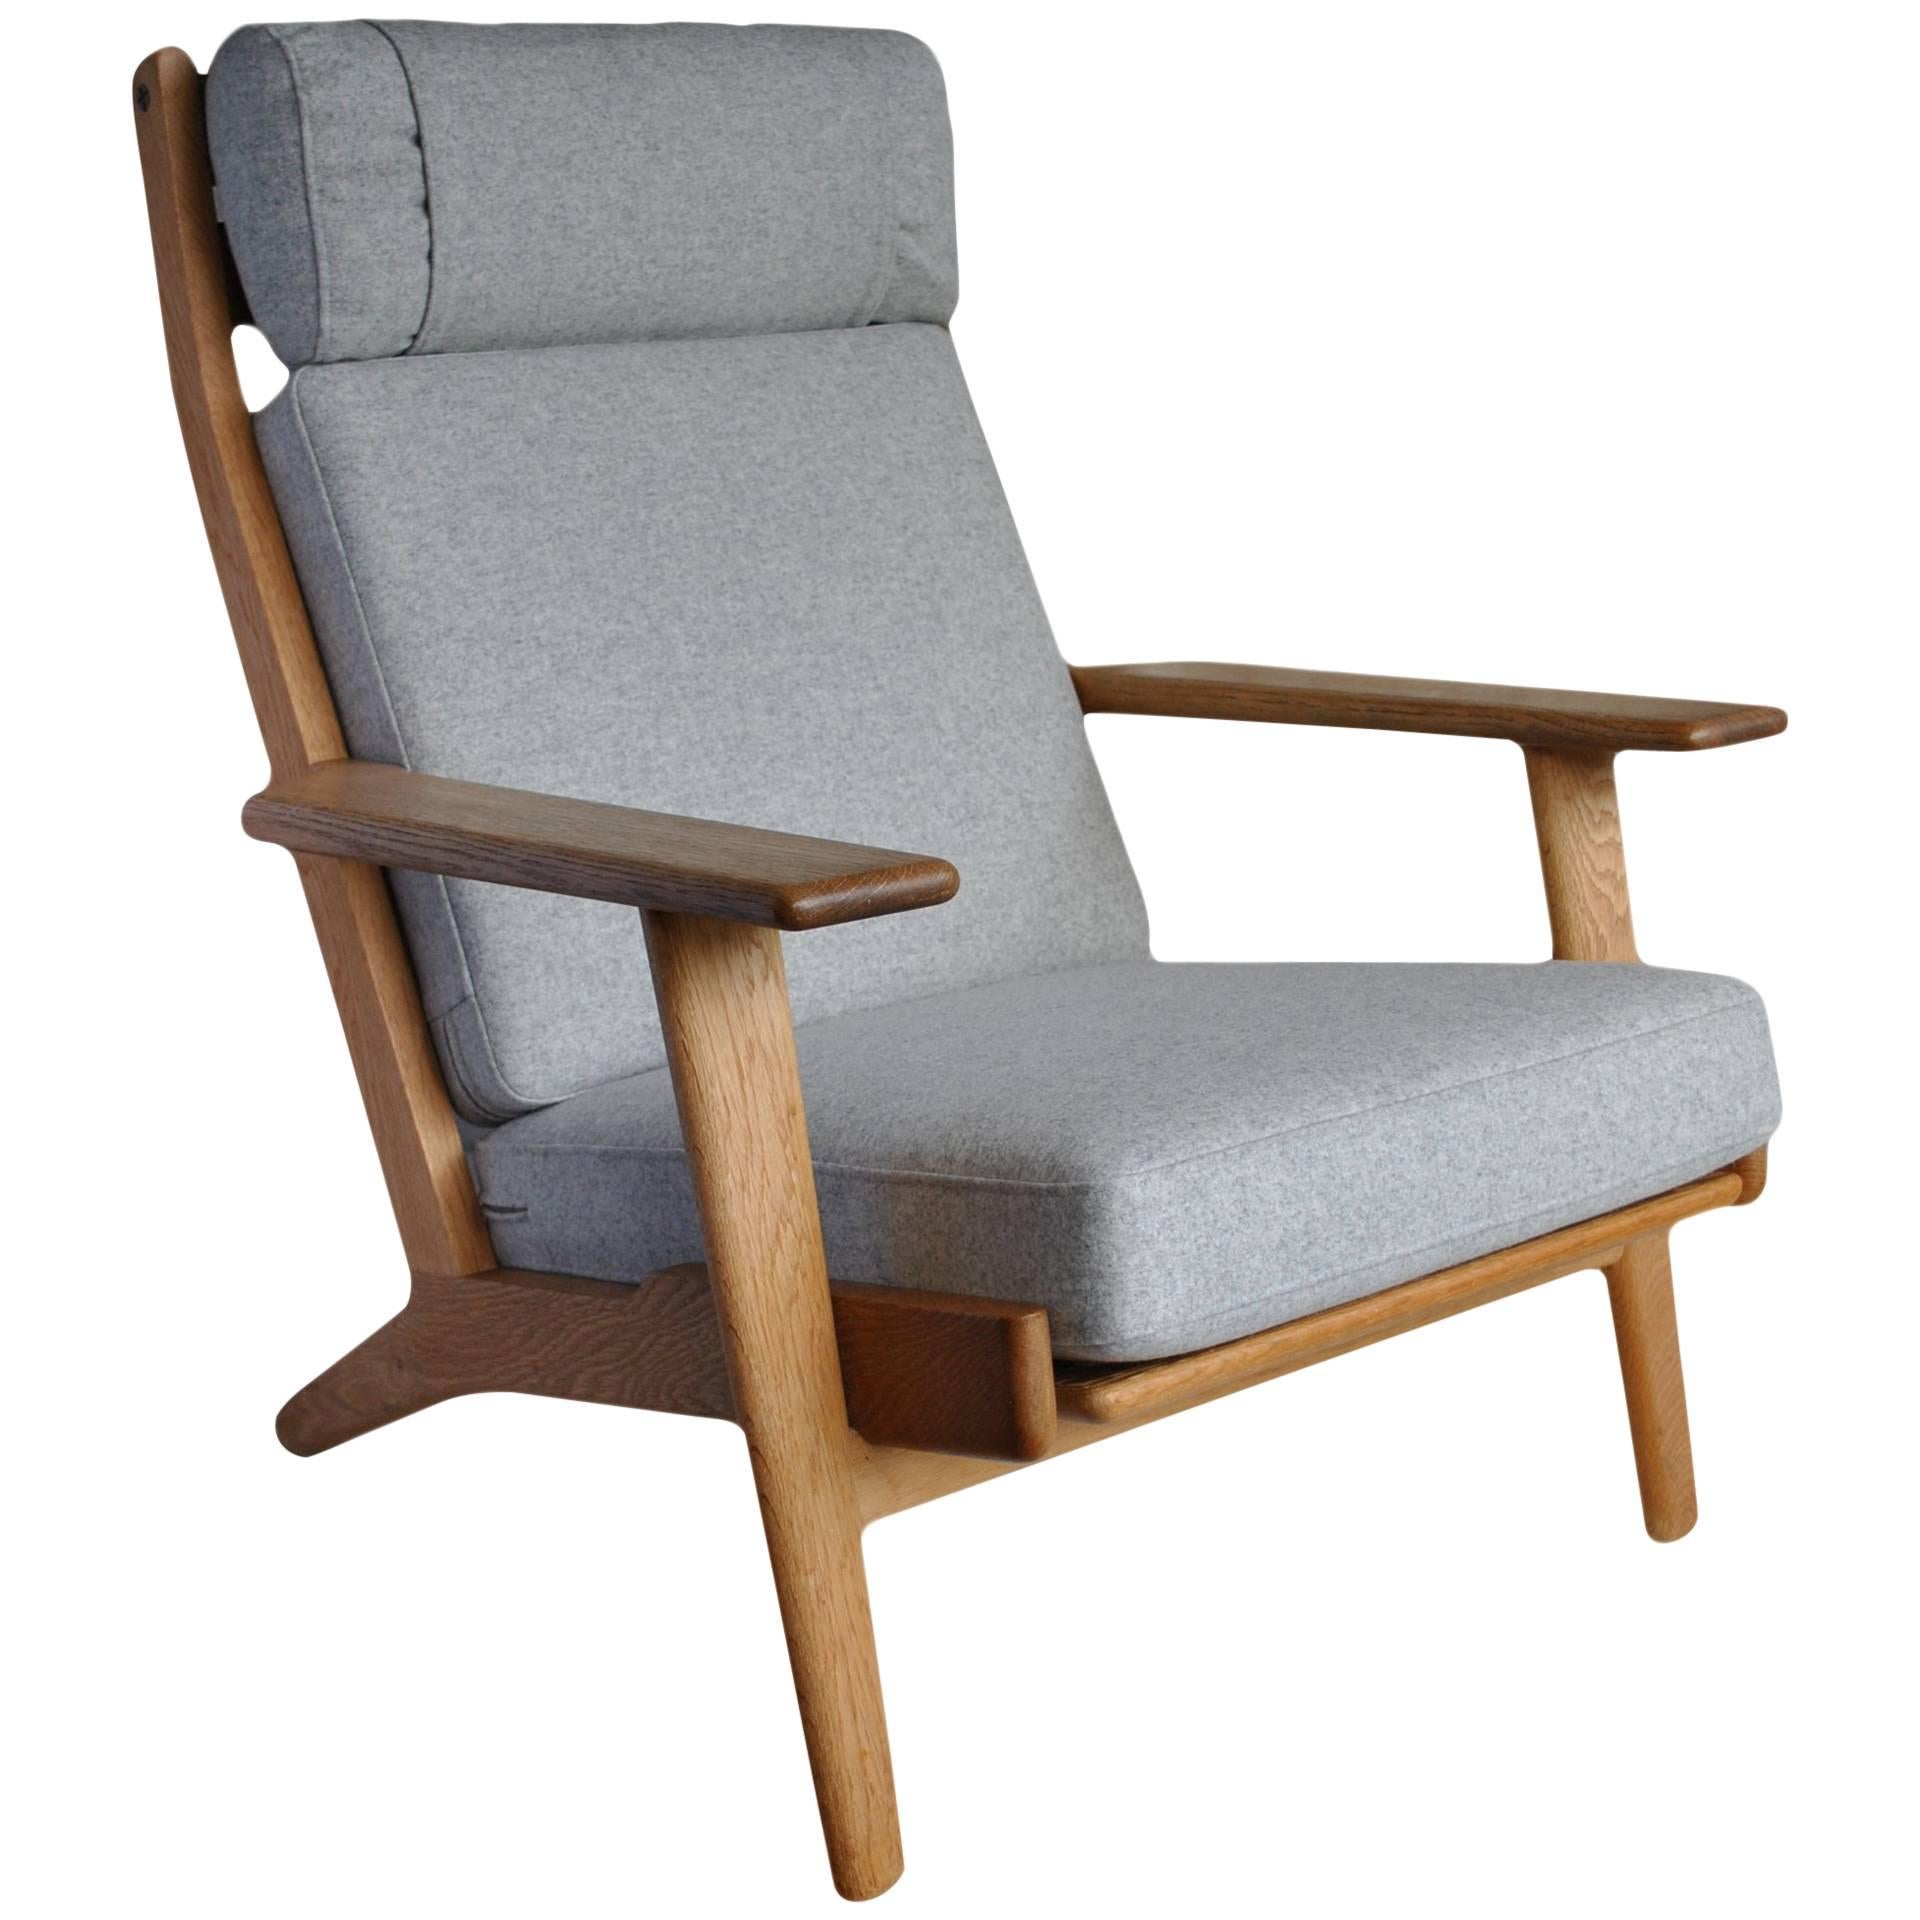 Hans Wegner GE290 Lounge Chair, 1950s Original. Fully refurbished.